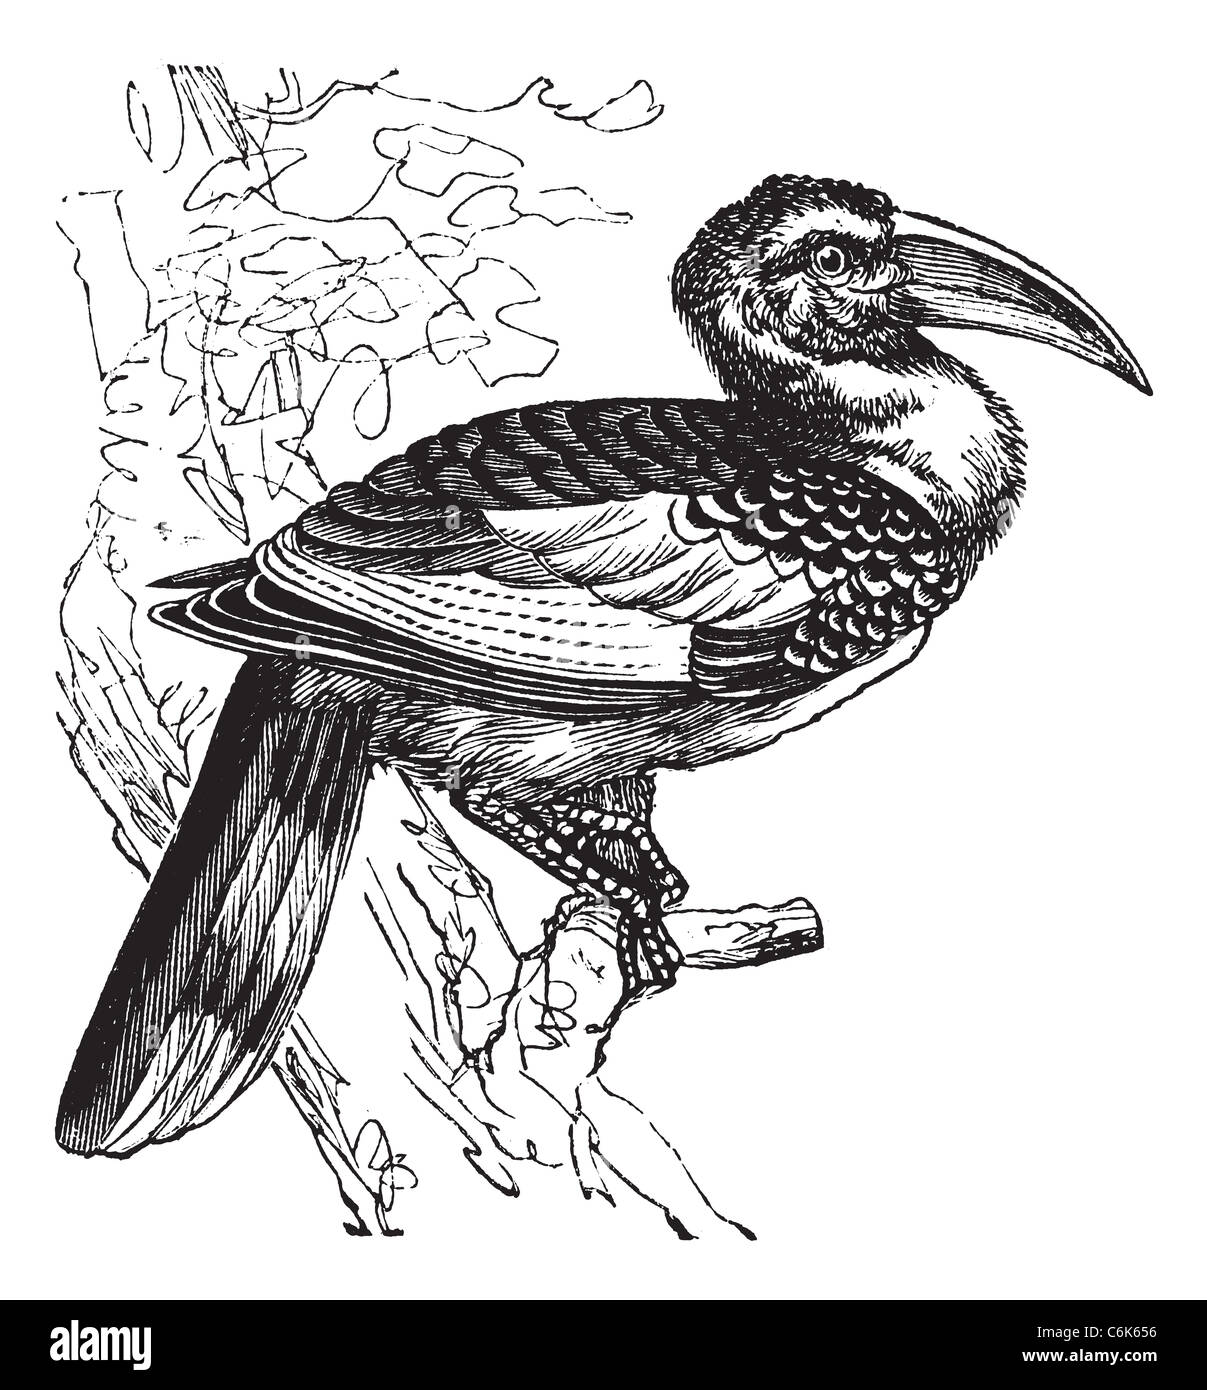 Red-billed Hornbill also known as Tockus erythrorhynchus, vintage engraved illustration of Red-billed Hornbill, bird. Stock Photo